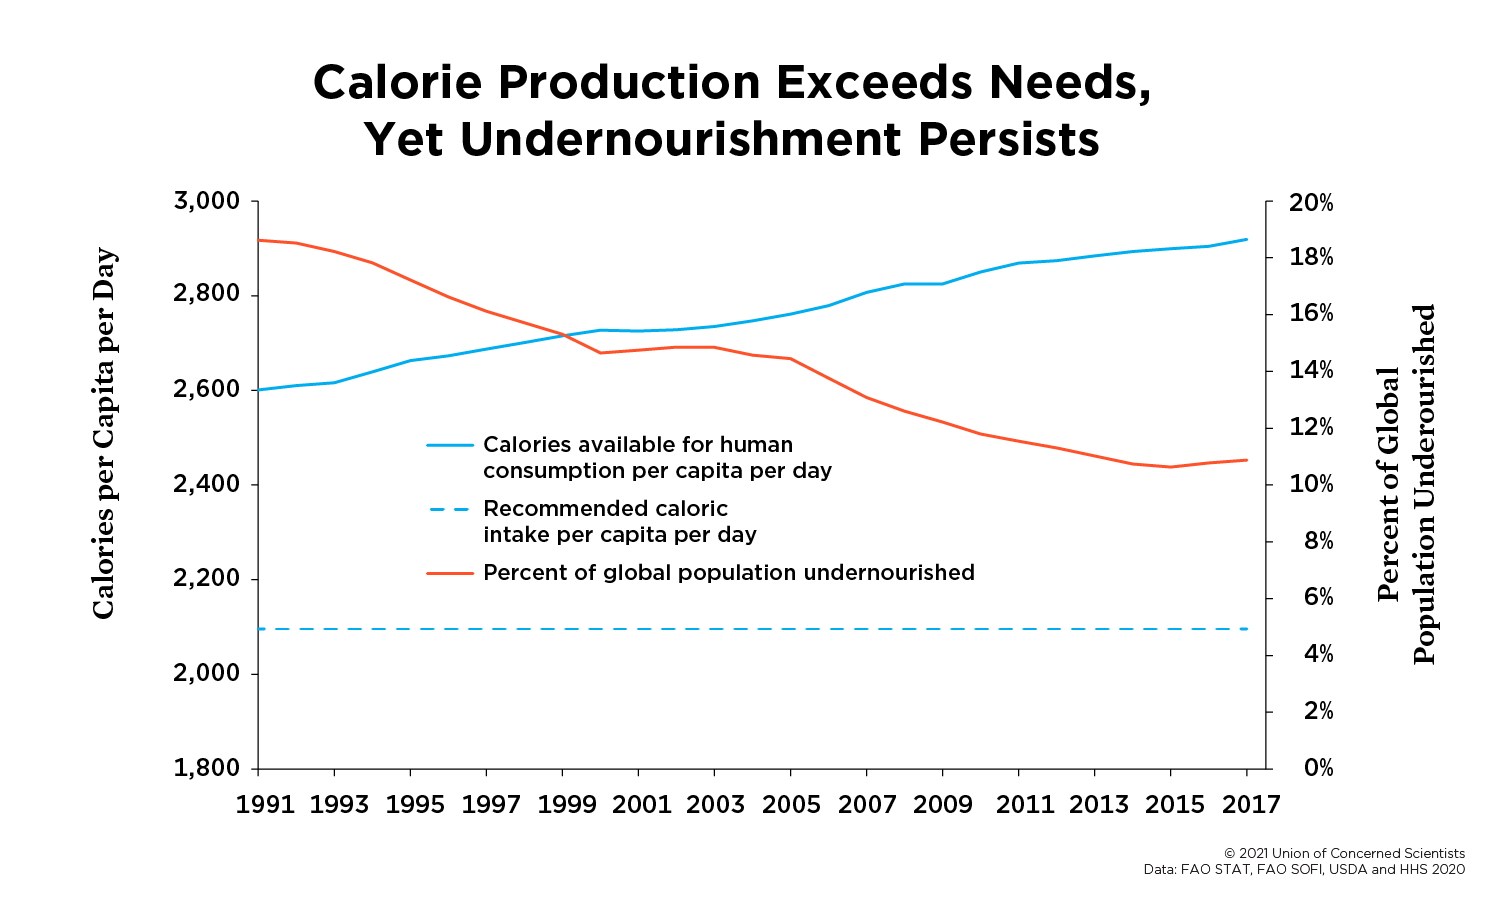 A line chart comparing undernourishment with calorie production